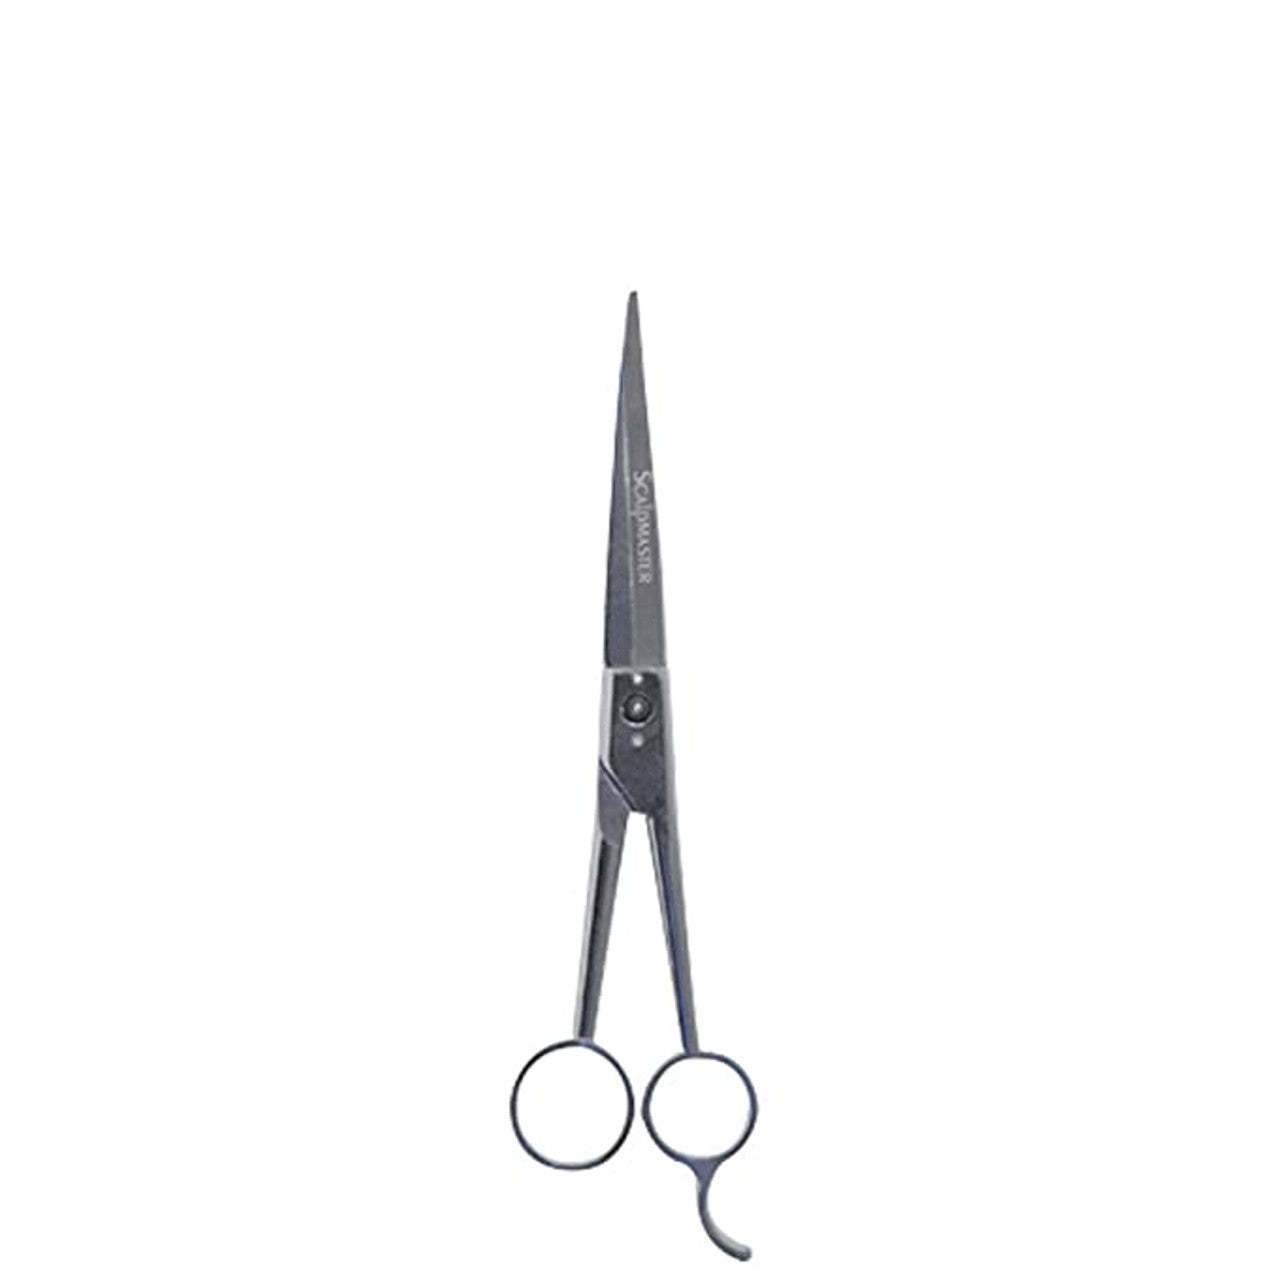 Scalpmaster Cutting Shears w/ Detachable Blades - 7.5in.